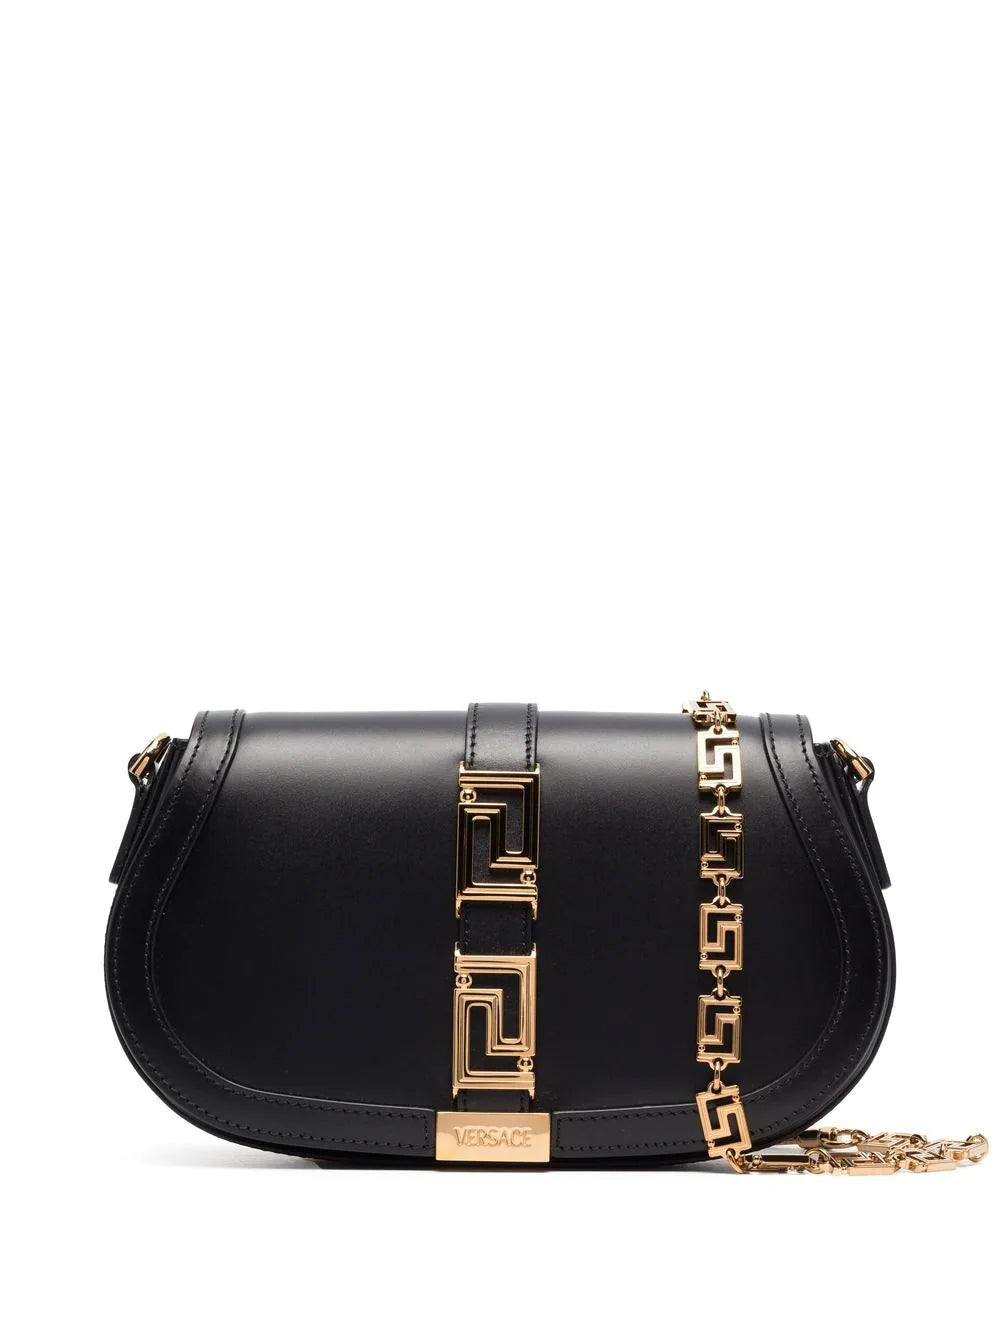 Versace Black Greca Goddess Medium Shoulder Bag